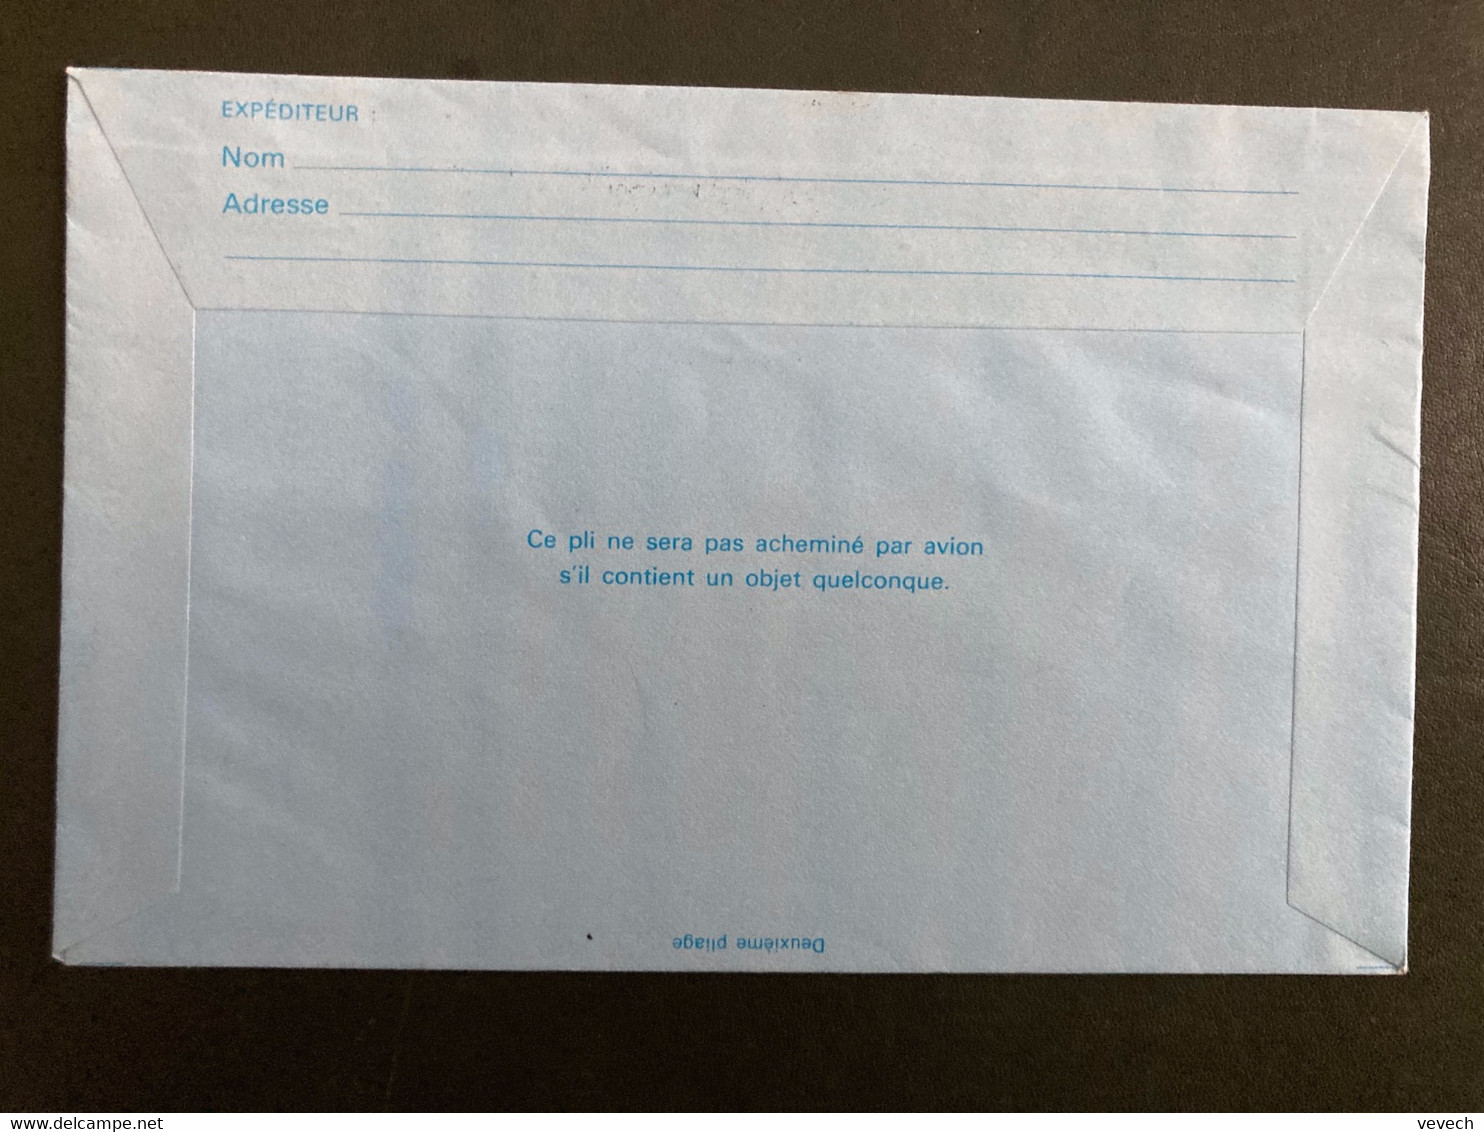 AEROGRAMME AVION 3,70 OBL.MEC.1-4 1986 ANDORRA - Stamped Stationery & Prêts-à-poster